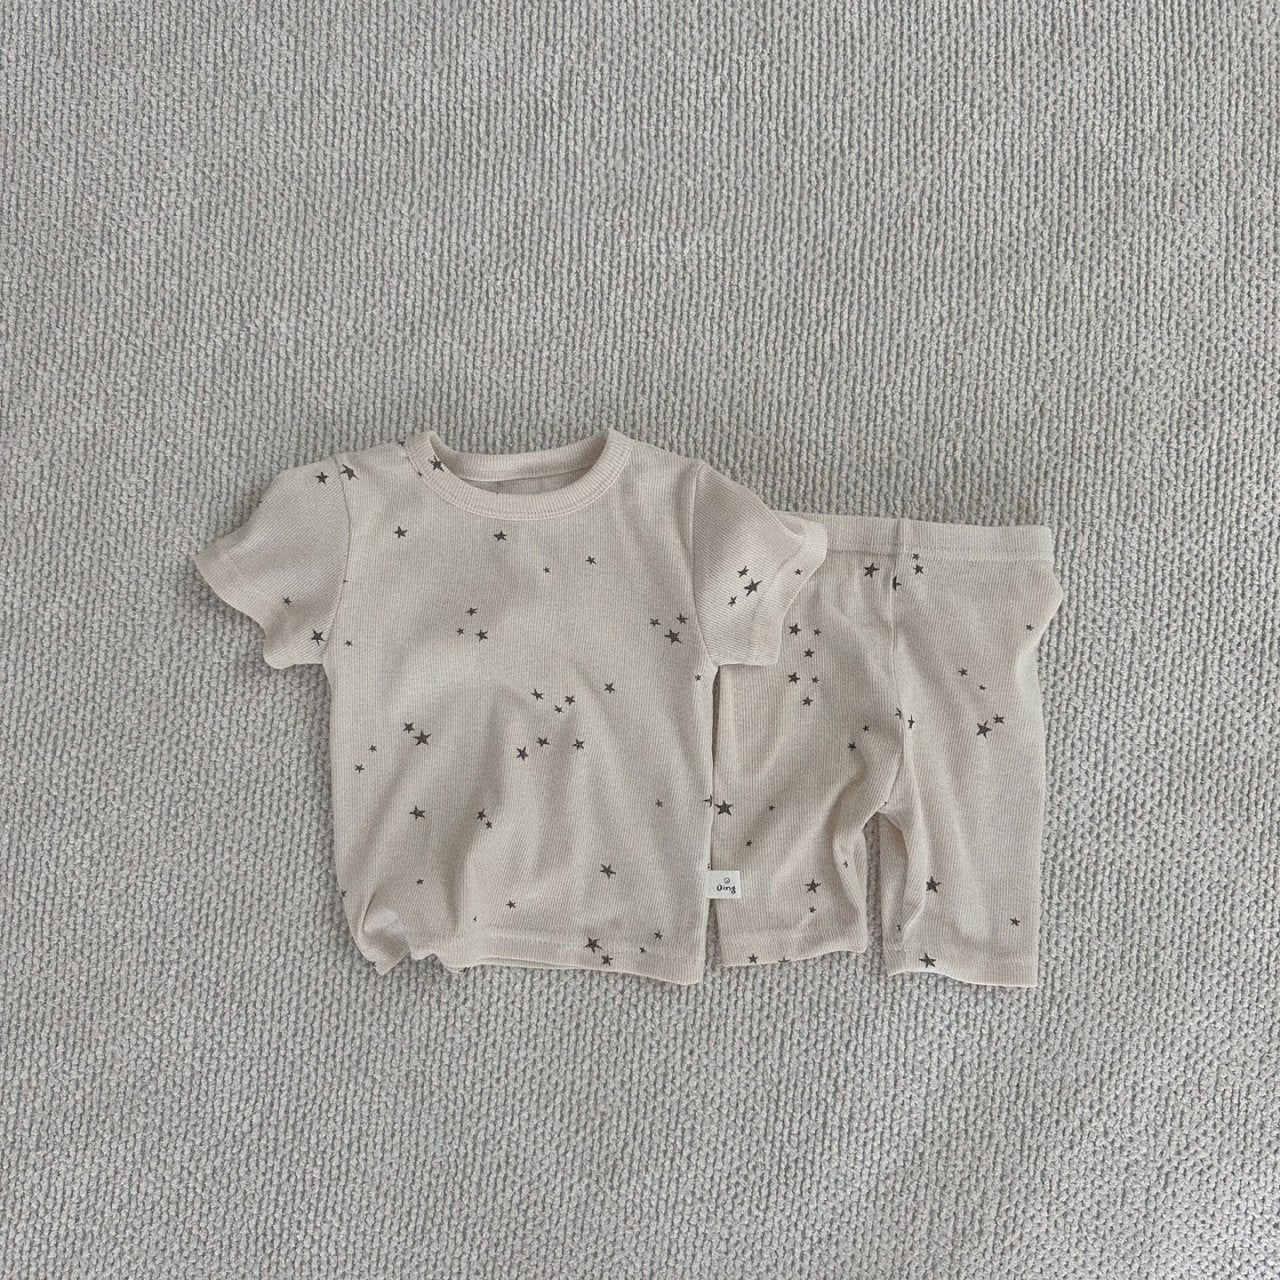 Toddler Star Print T-Shirt and Shorts Set (3-5y) - Cream